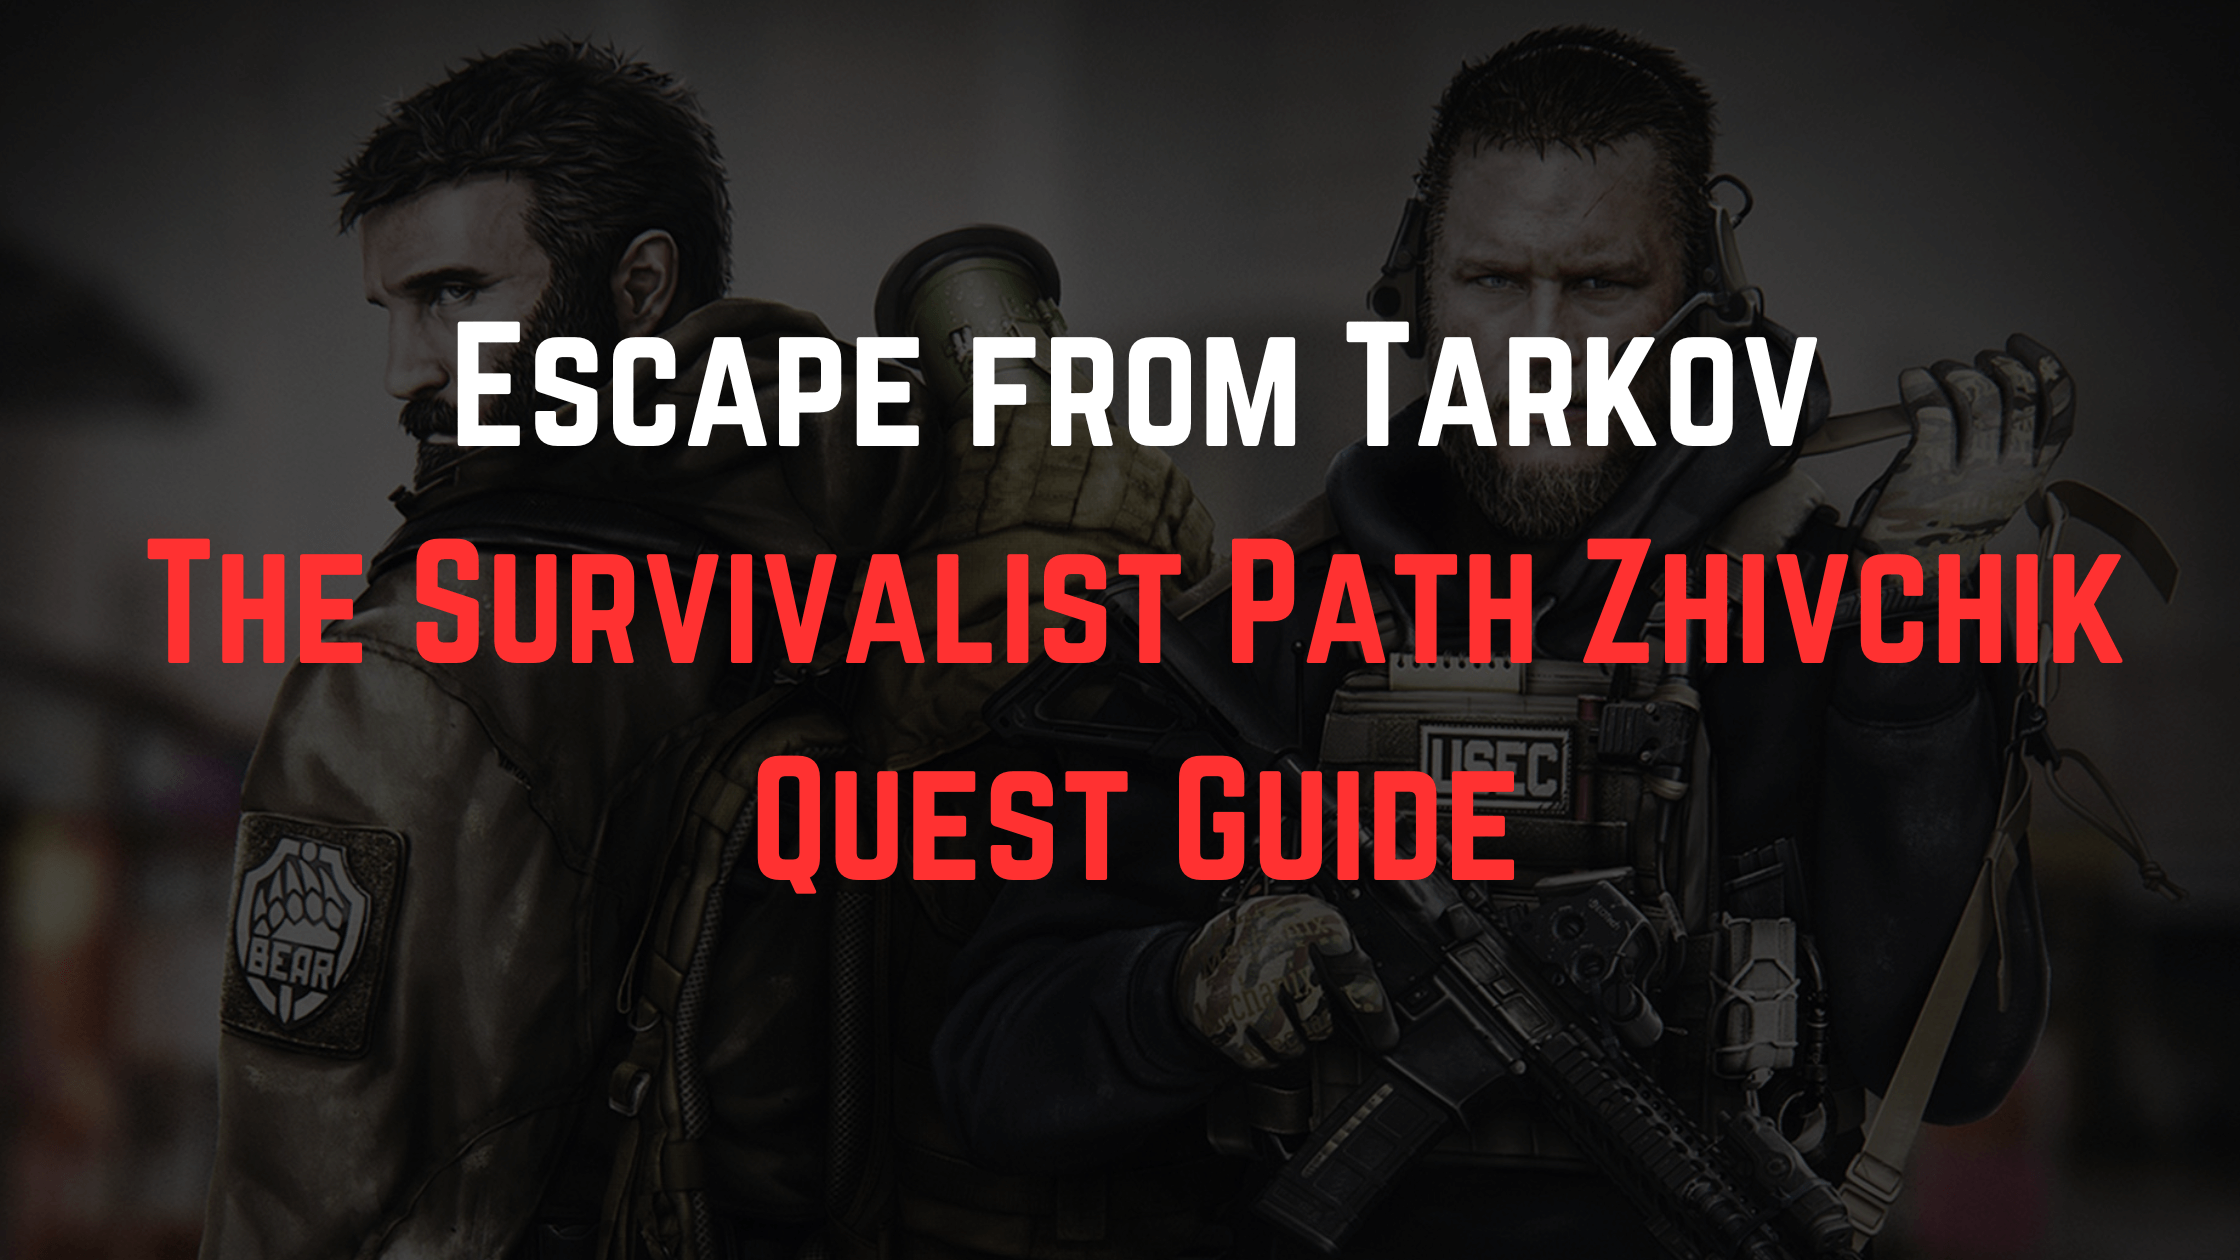 The Survivalist Path Zhivchik